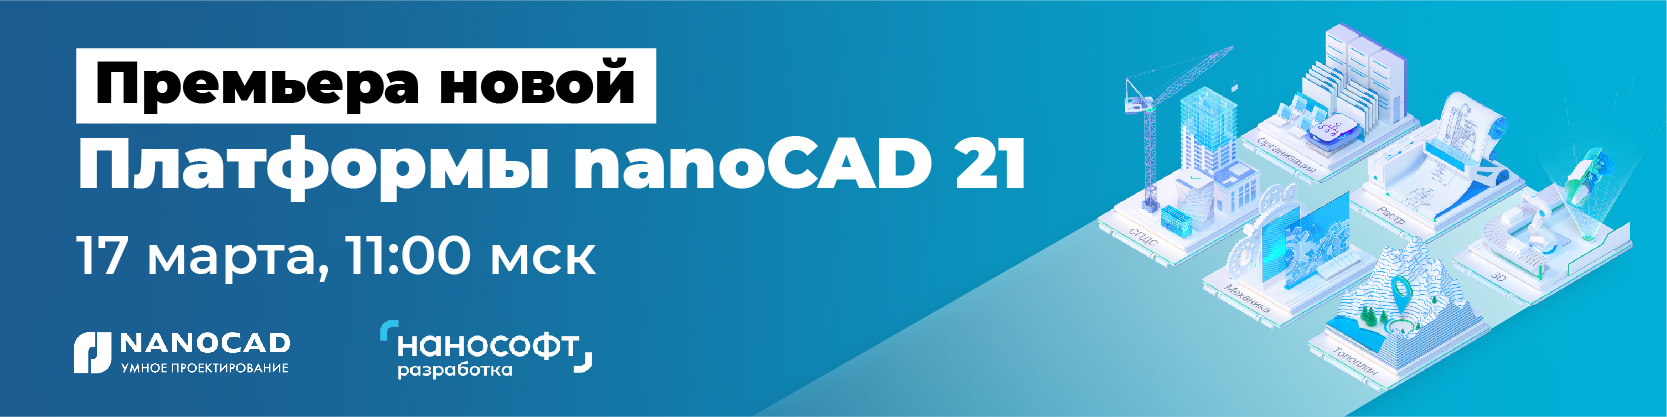 Онлайн-презентация Платформы nanoCAD 21